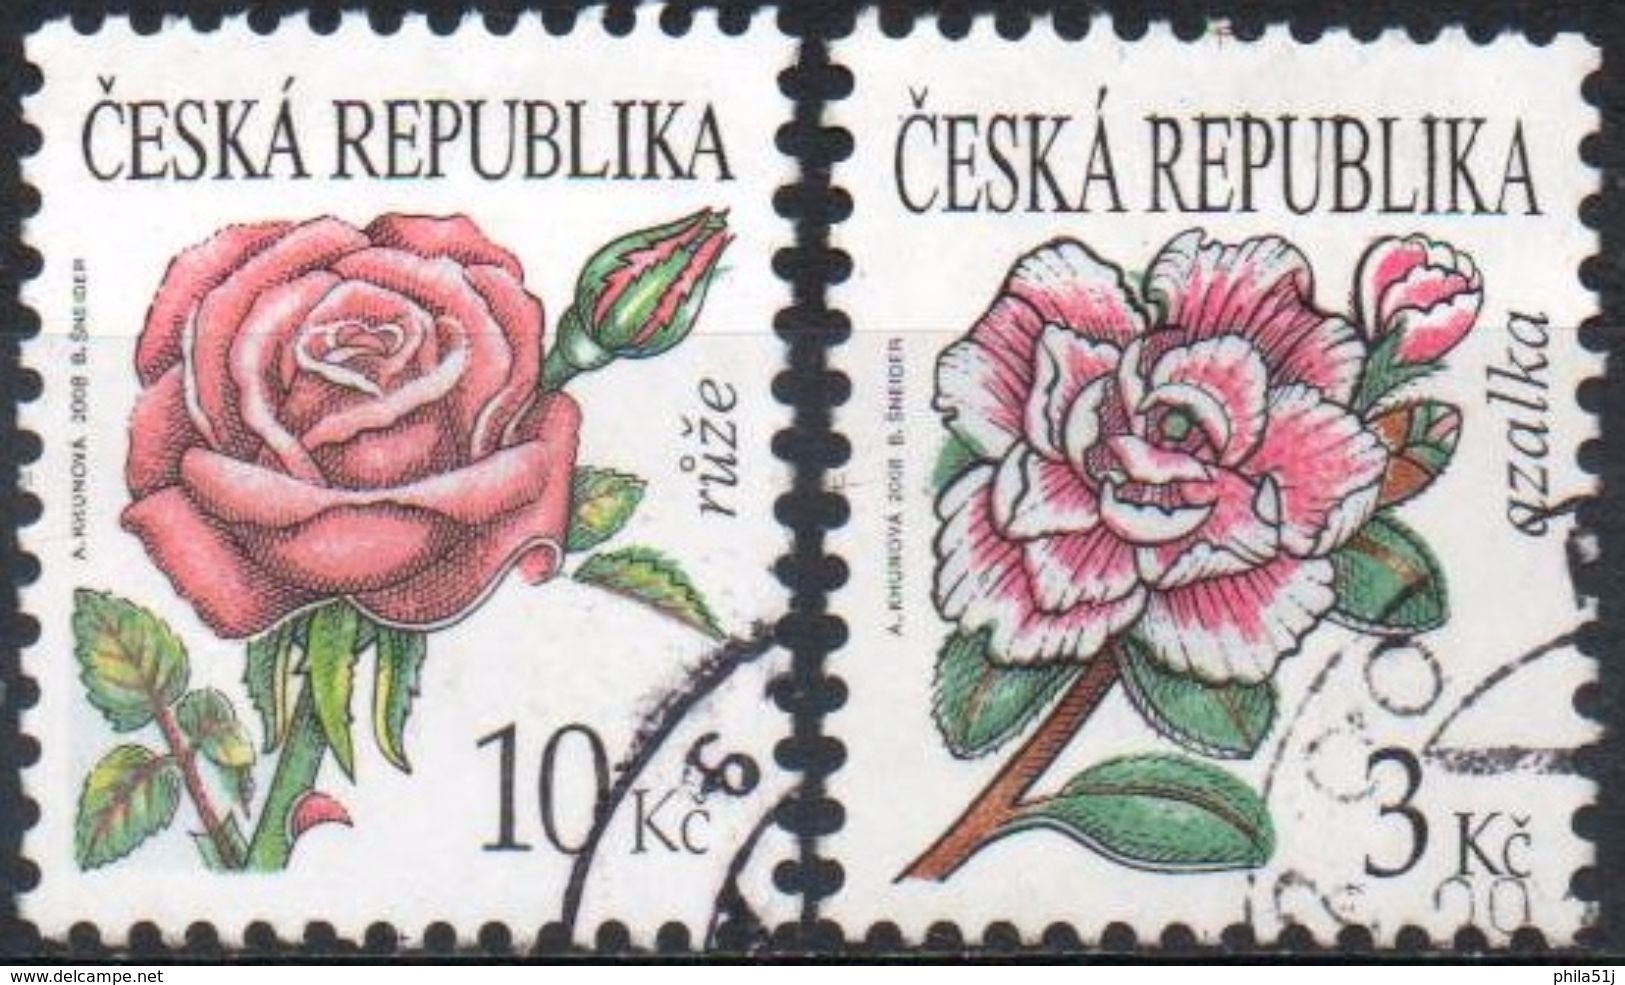 TCHEQUIE  N°491 Et 502__ OBL VOIR SCAN - Used Stamps